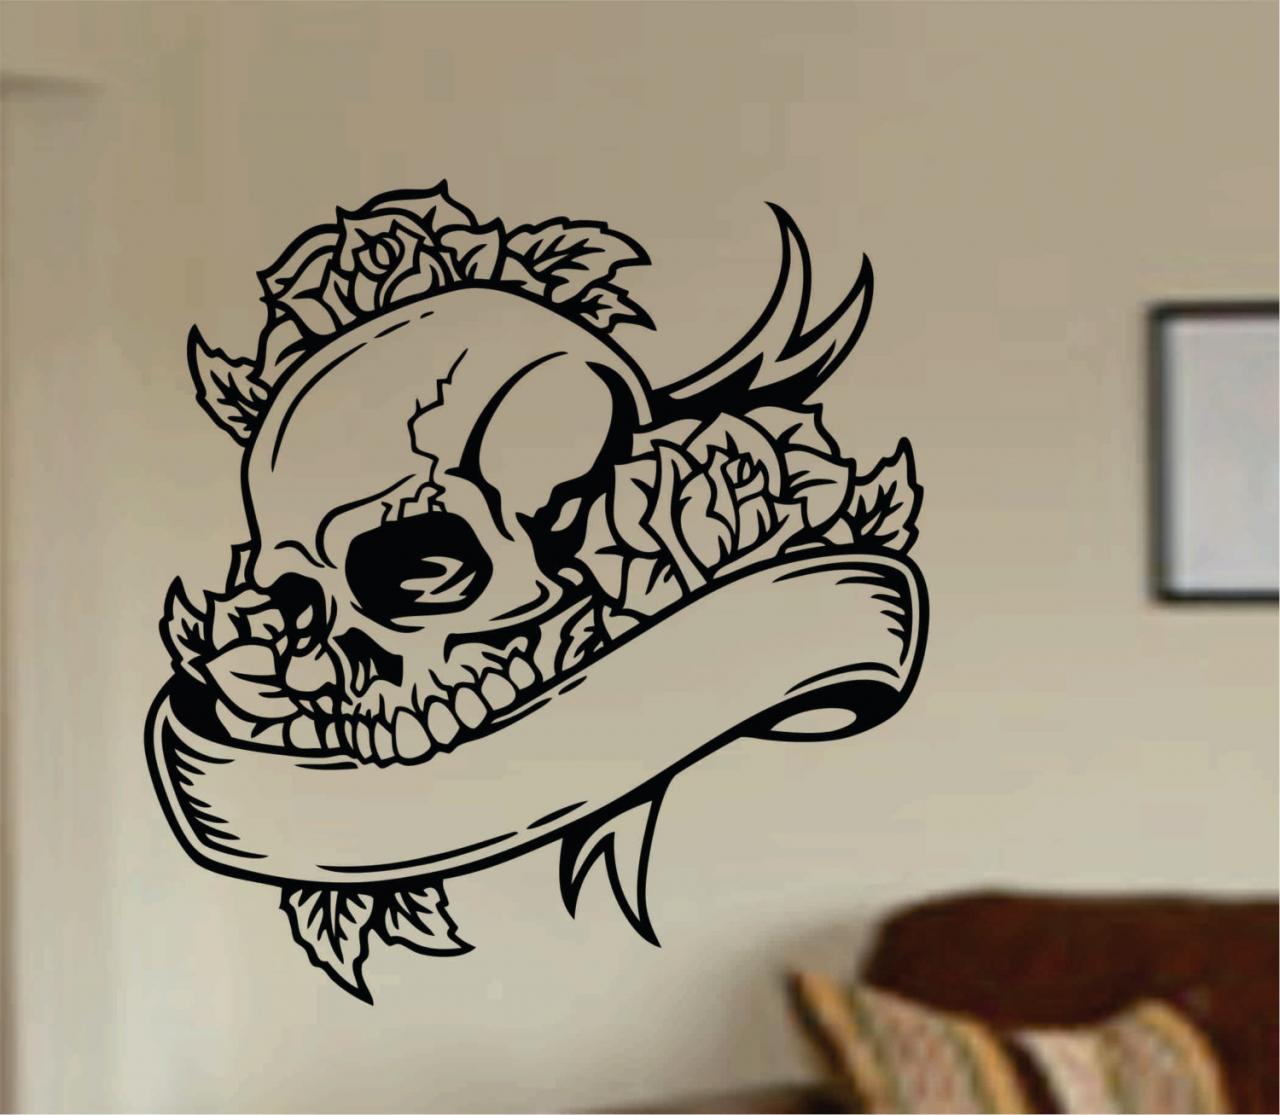 Tattoo Skull With Banner Wall Vinyl Decal Sticker Art Graphic Sticker Sugar Skull Sugarskull Tattooed